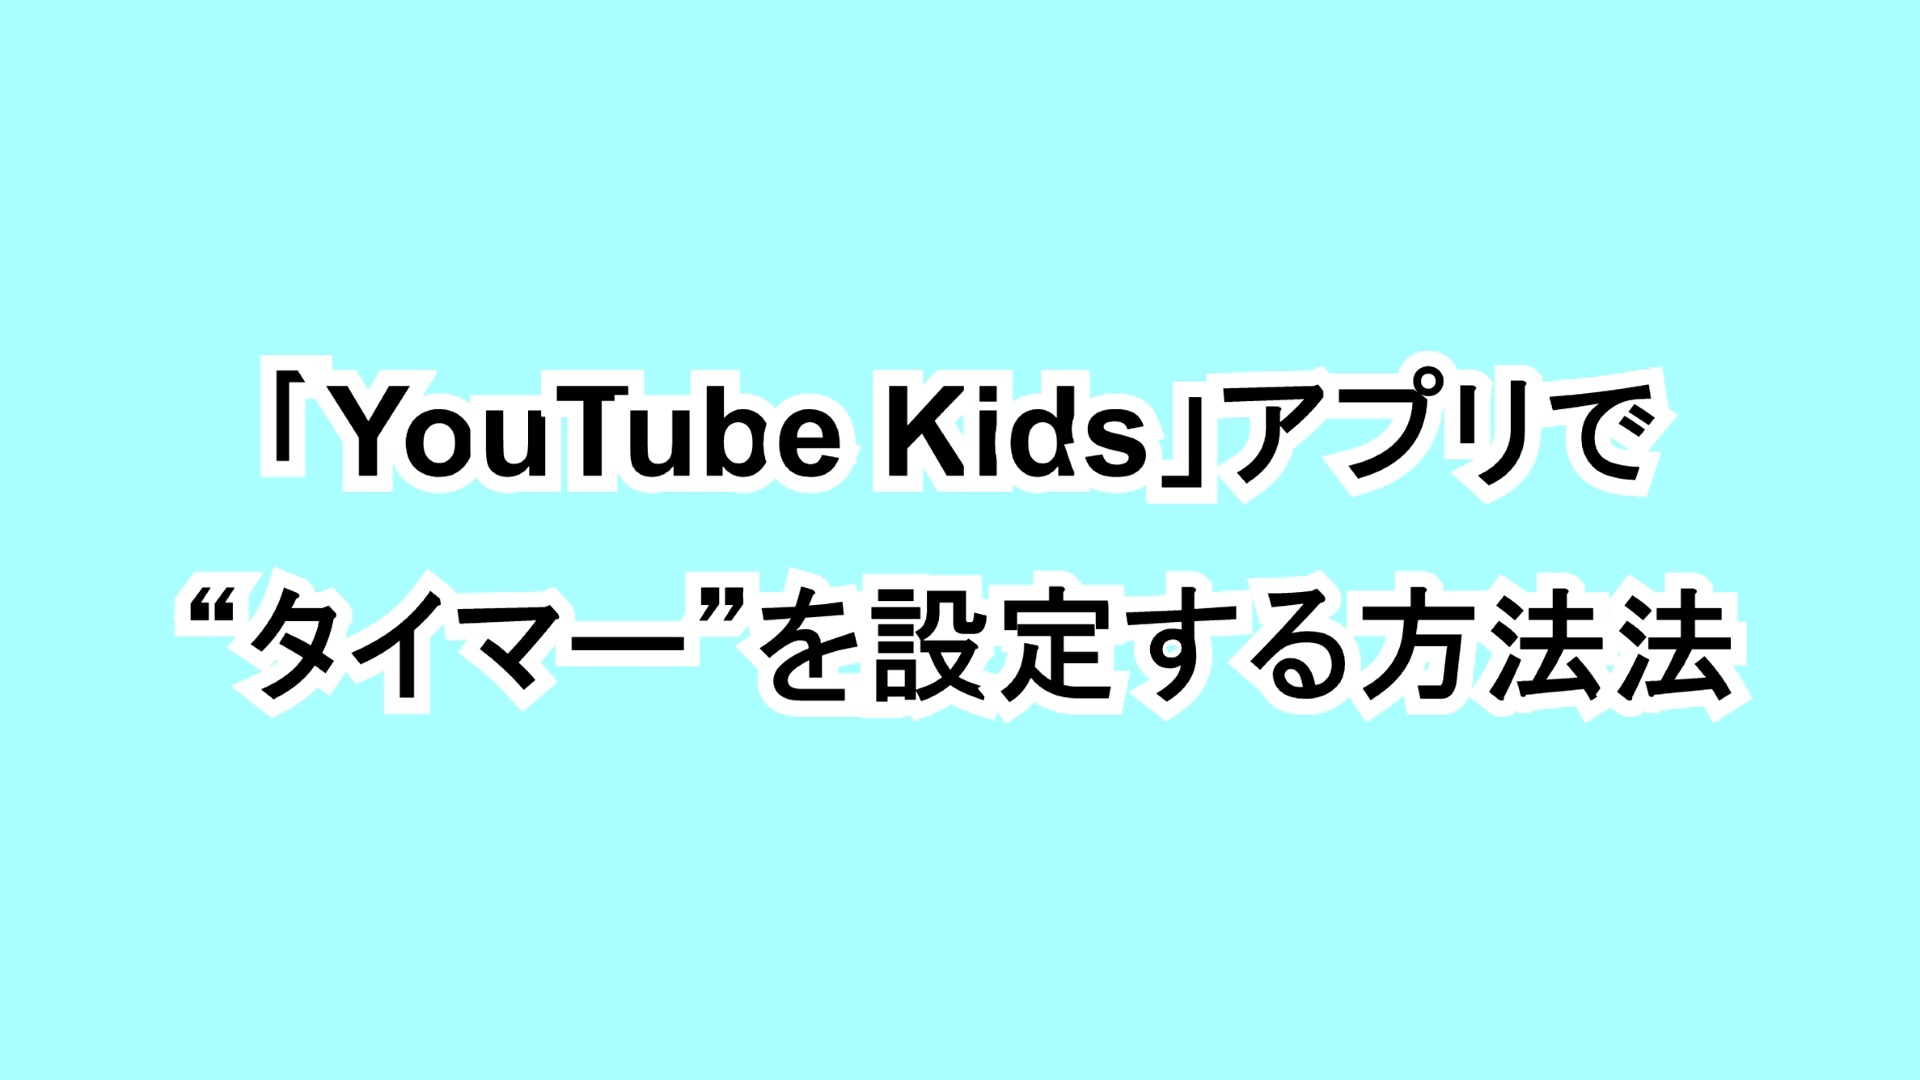 「YouTube Kids」アプリで“タイマー”を設定する方法